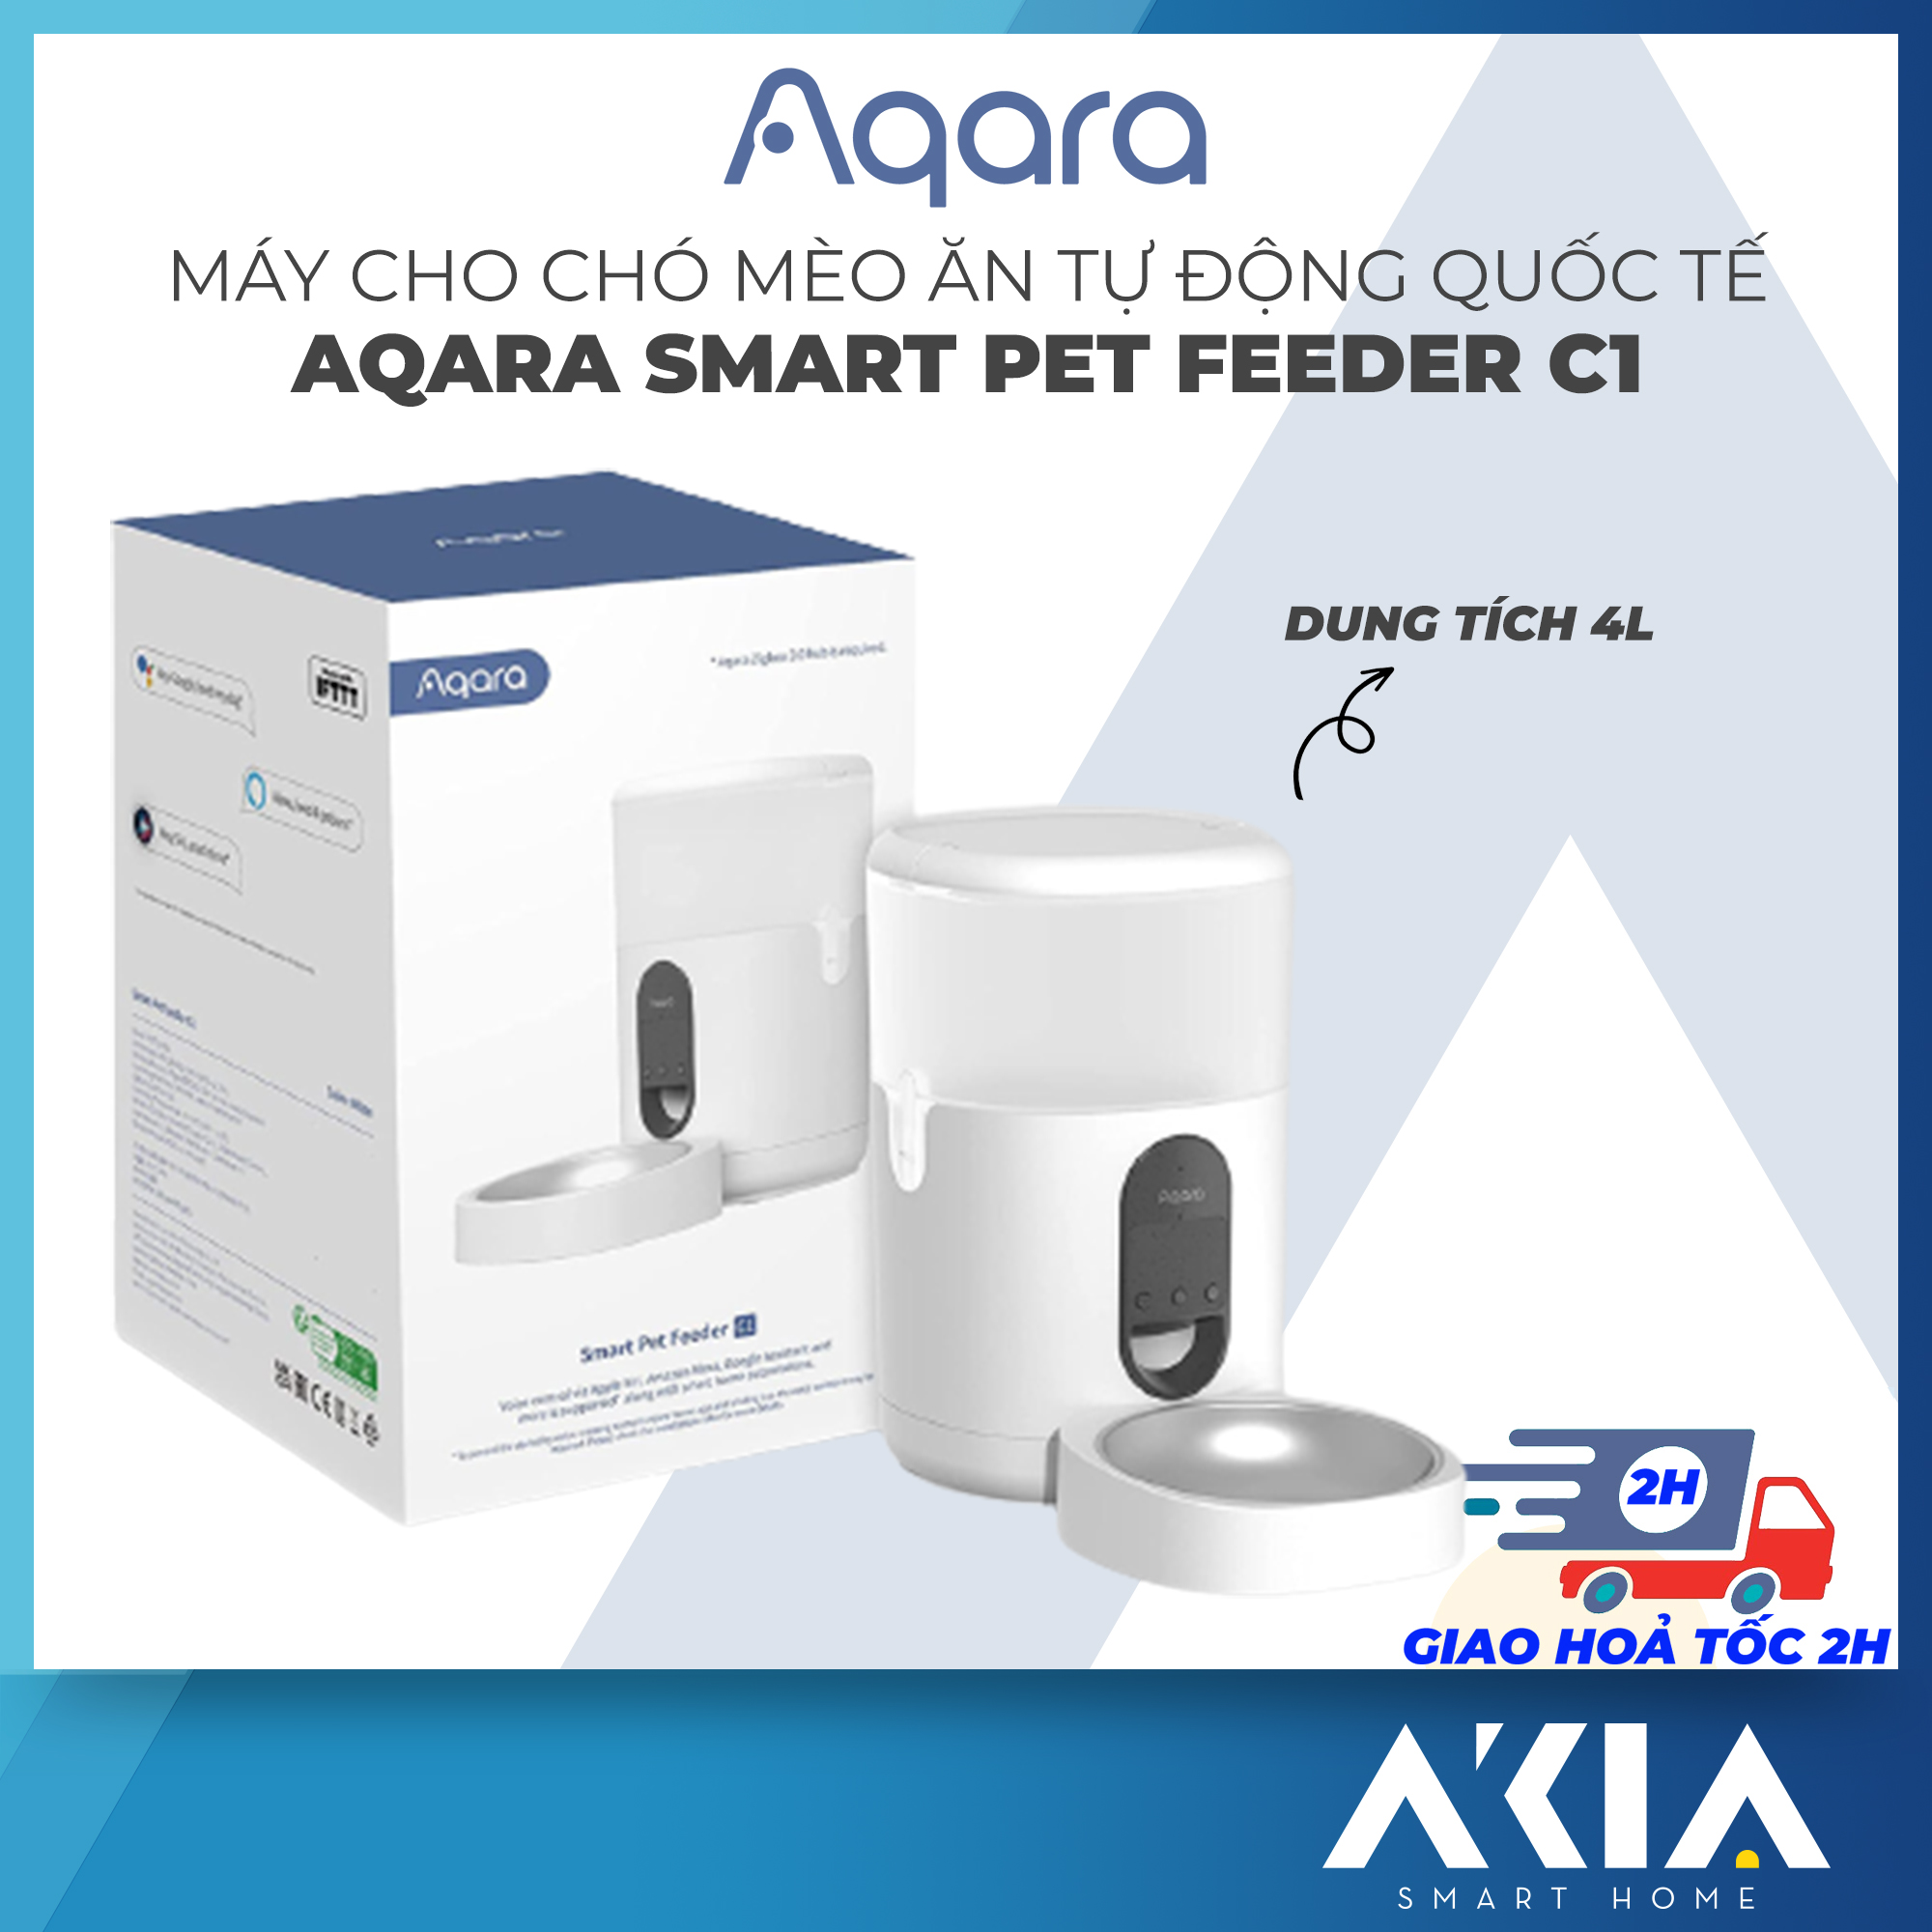 Aqara Smart Pet Feeder C1 International version, capacity 4L, timer feeding